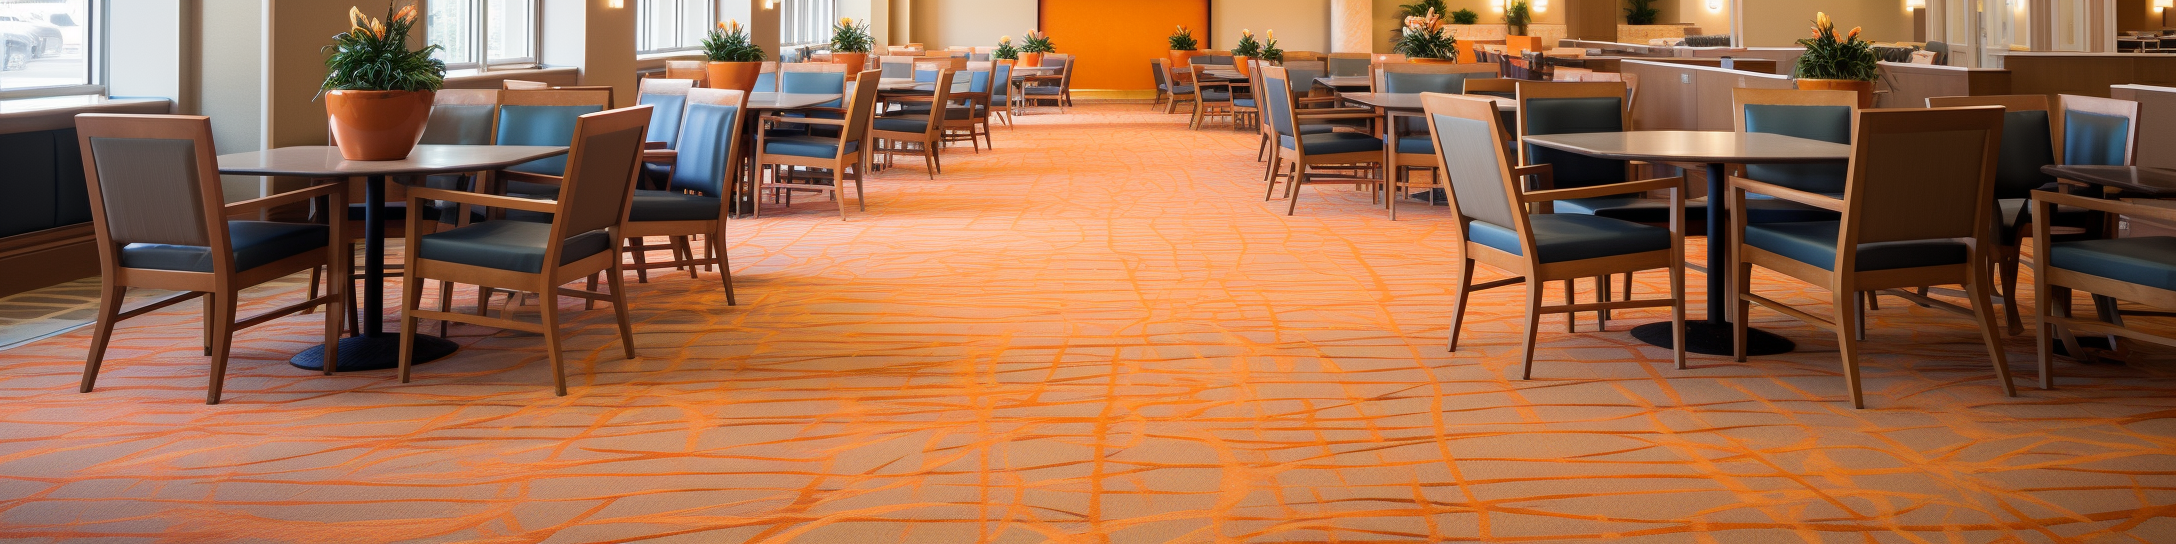 Clean Carpets on Restaurant Aesthetics and Hygiene